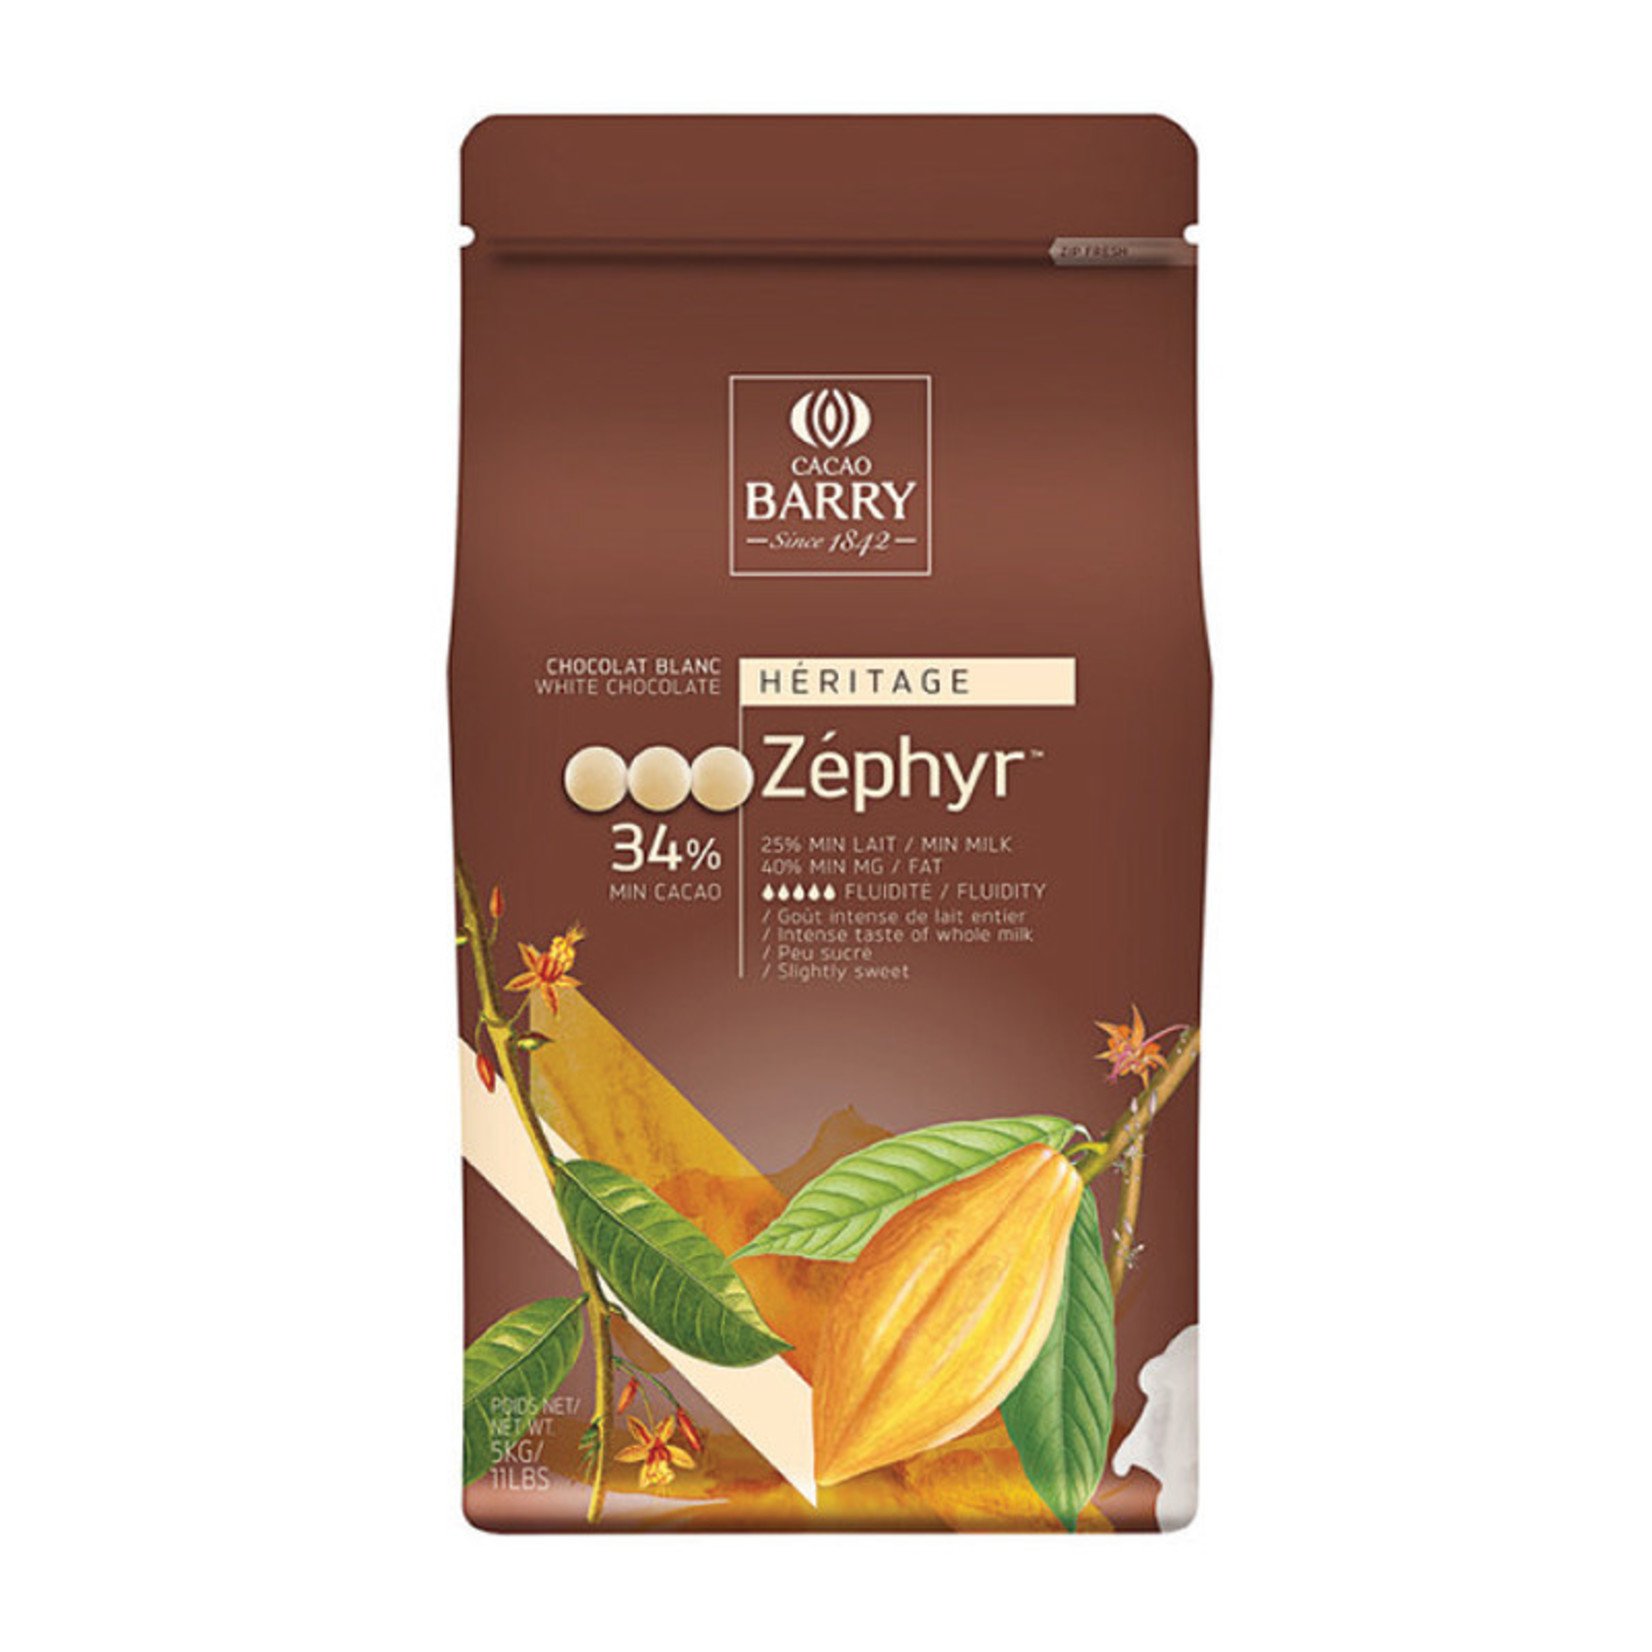 Cacao Barry Cacao Barry - Zephyr White Chocolate 34% - 5kg/11 lb, CHW-N34ZEPH-US-U77